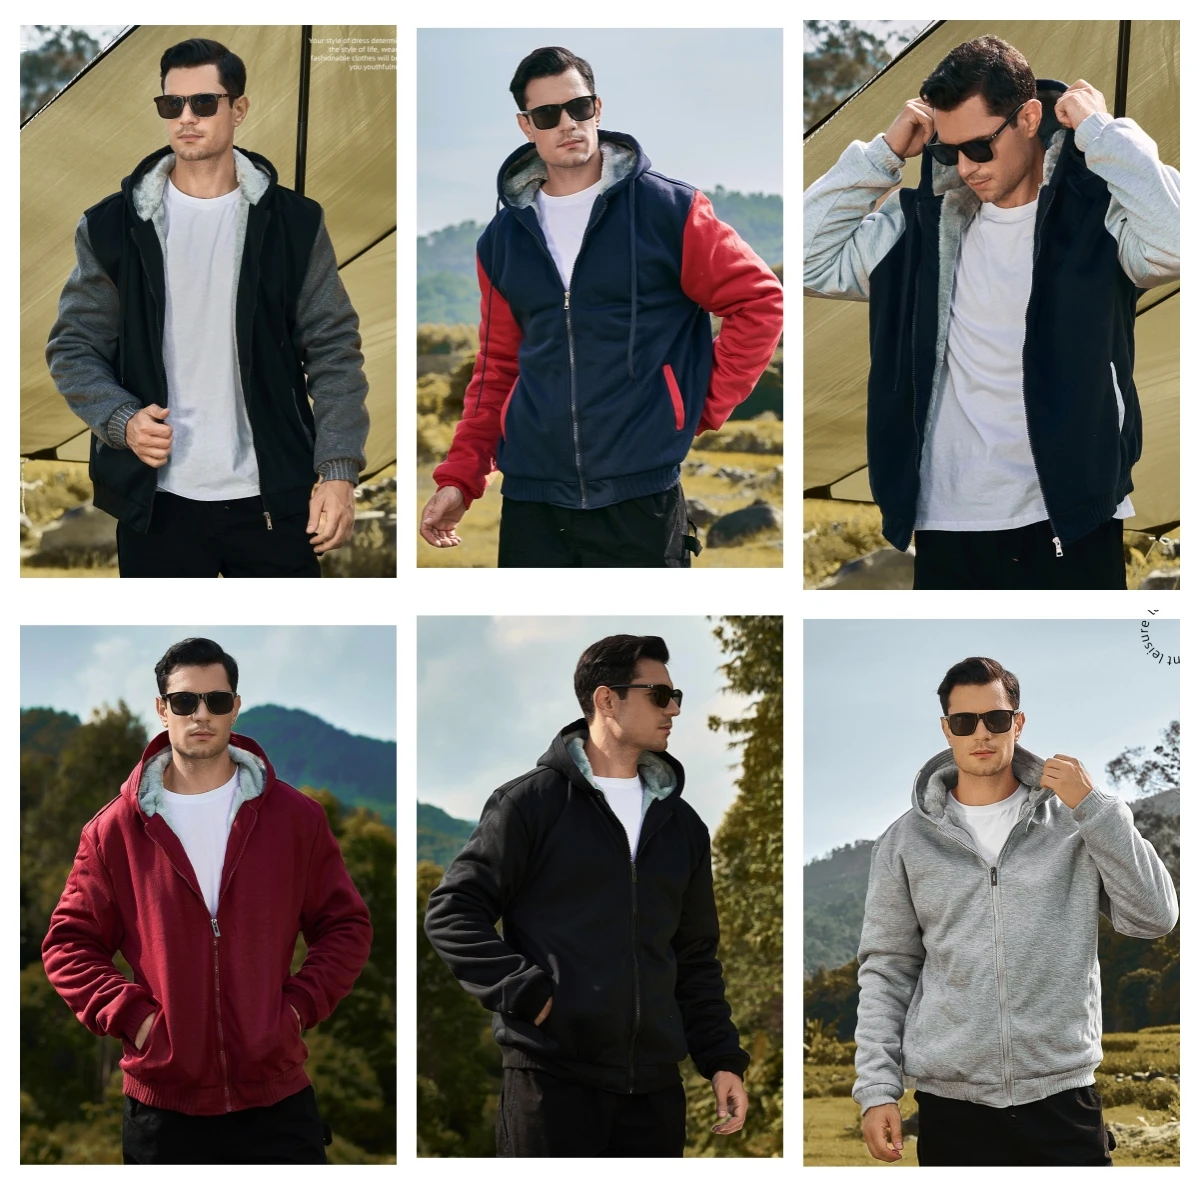 

New Autumn Winter Warm Thick Fleece Men's Hoodies Ziplock Coat Casual Hooded Sportswear Tracksuits Jacket Euro Size M-4XL